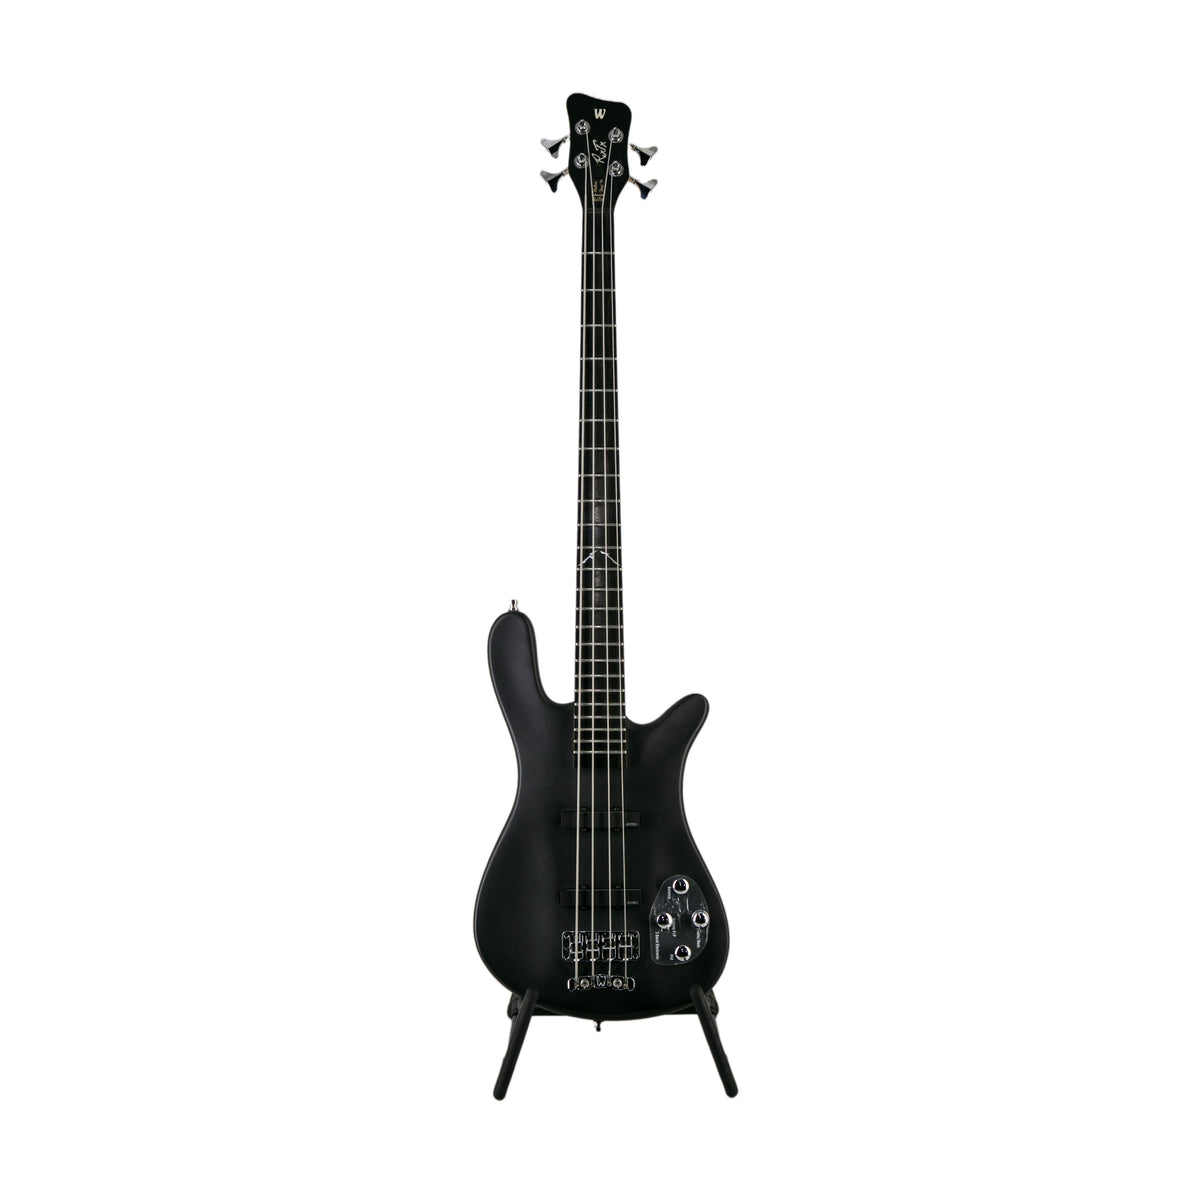 Warwick RockBass 4-String Bass Guitar – Nirvana Black, Gator GFW-GTR-1000 Stand, KLIQ TinyTune, ErnieBall Cable Bundle 